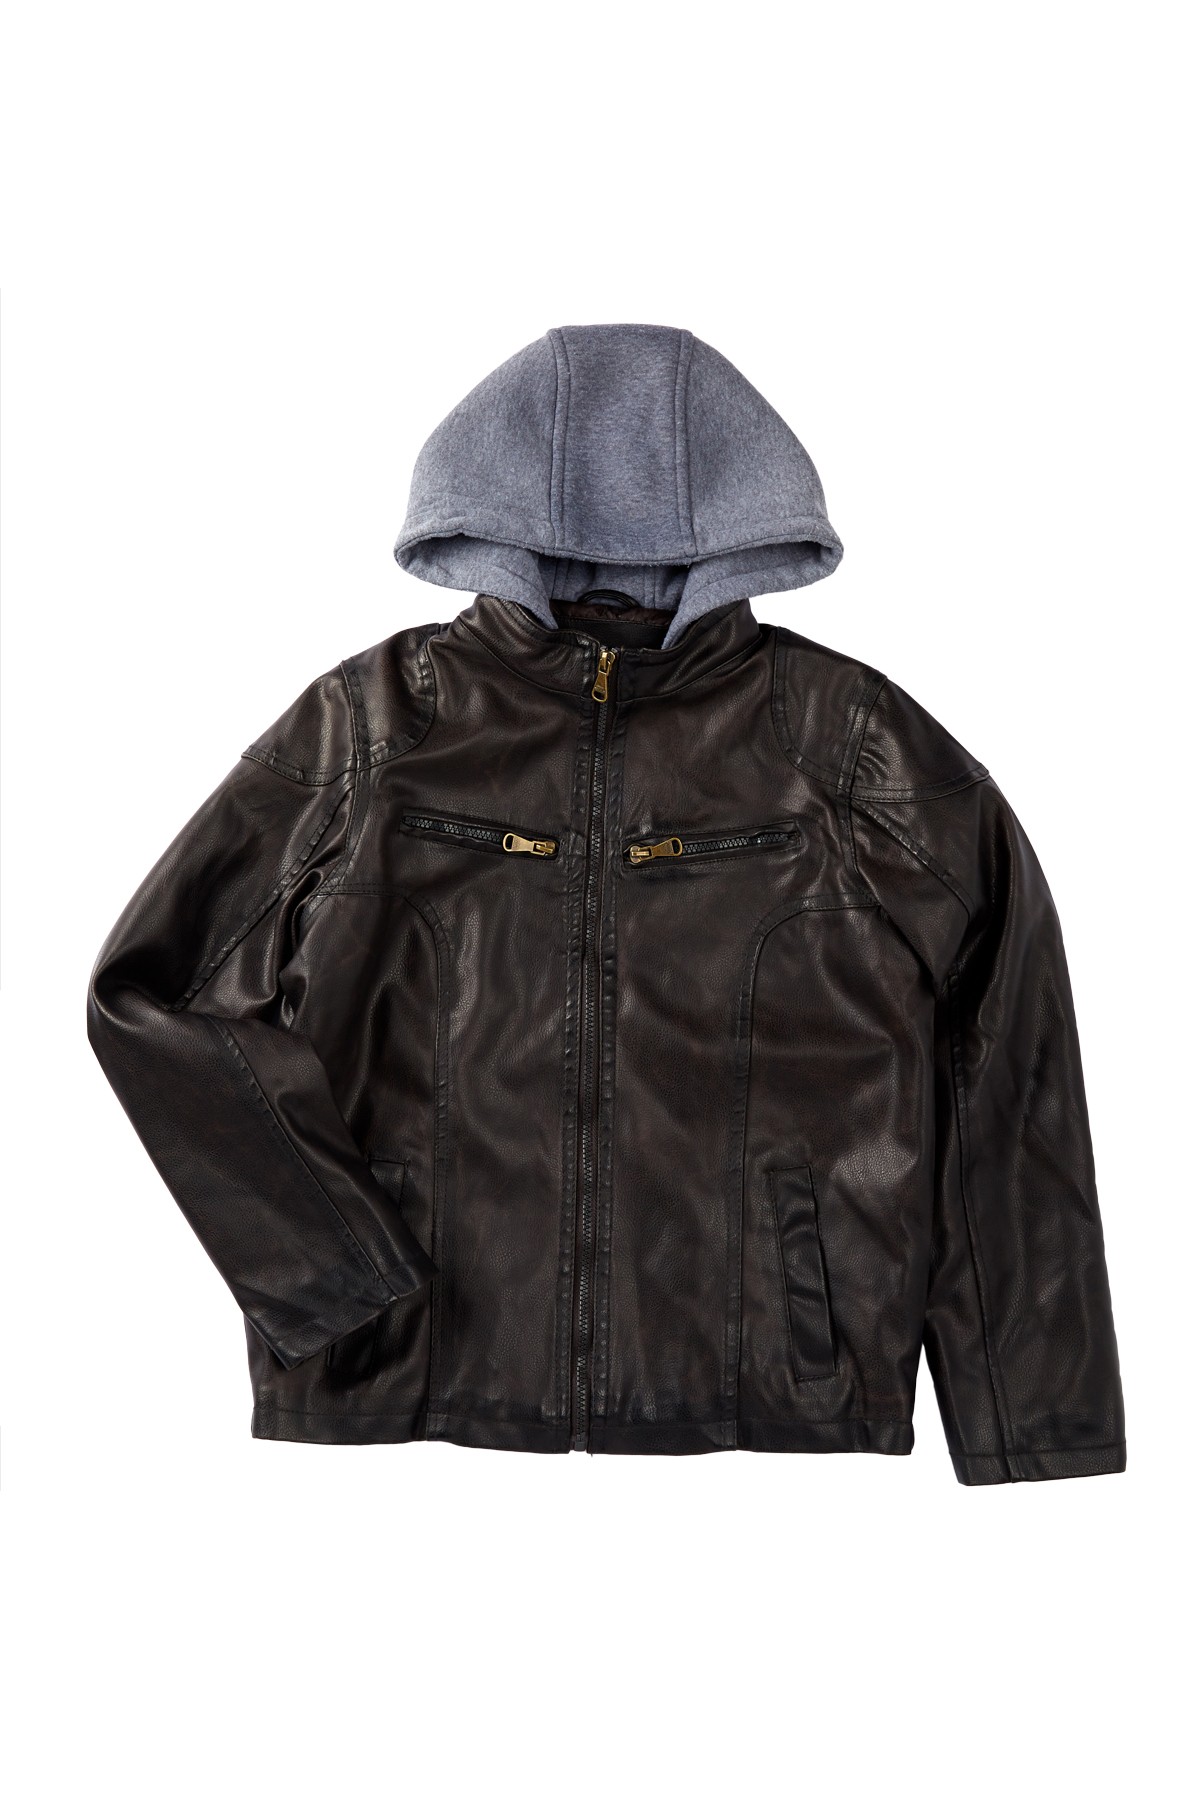 Tommy Hilfiger Men's Faux-Leather Bomber Jacket